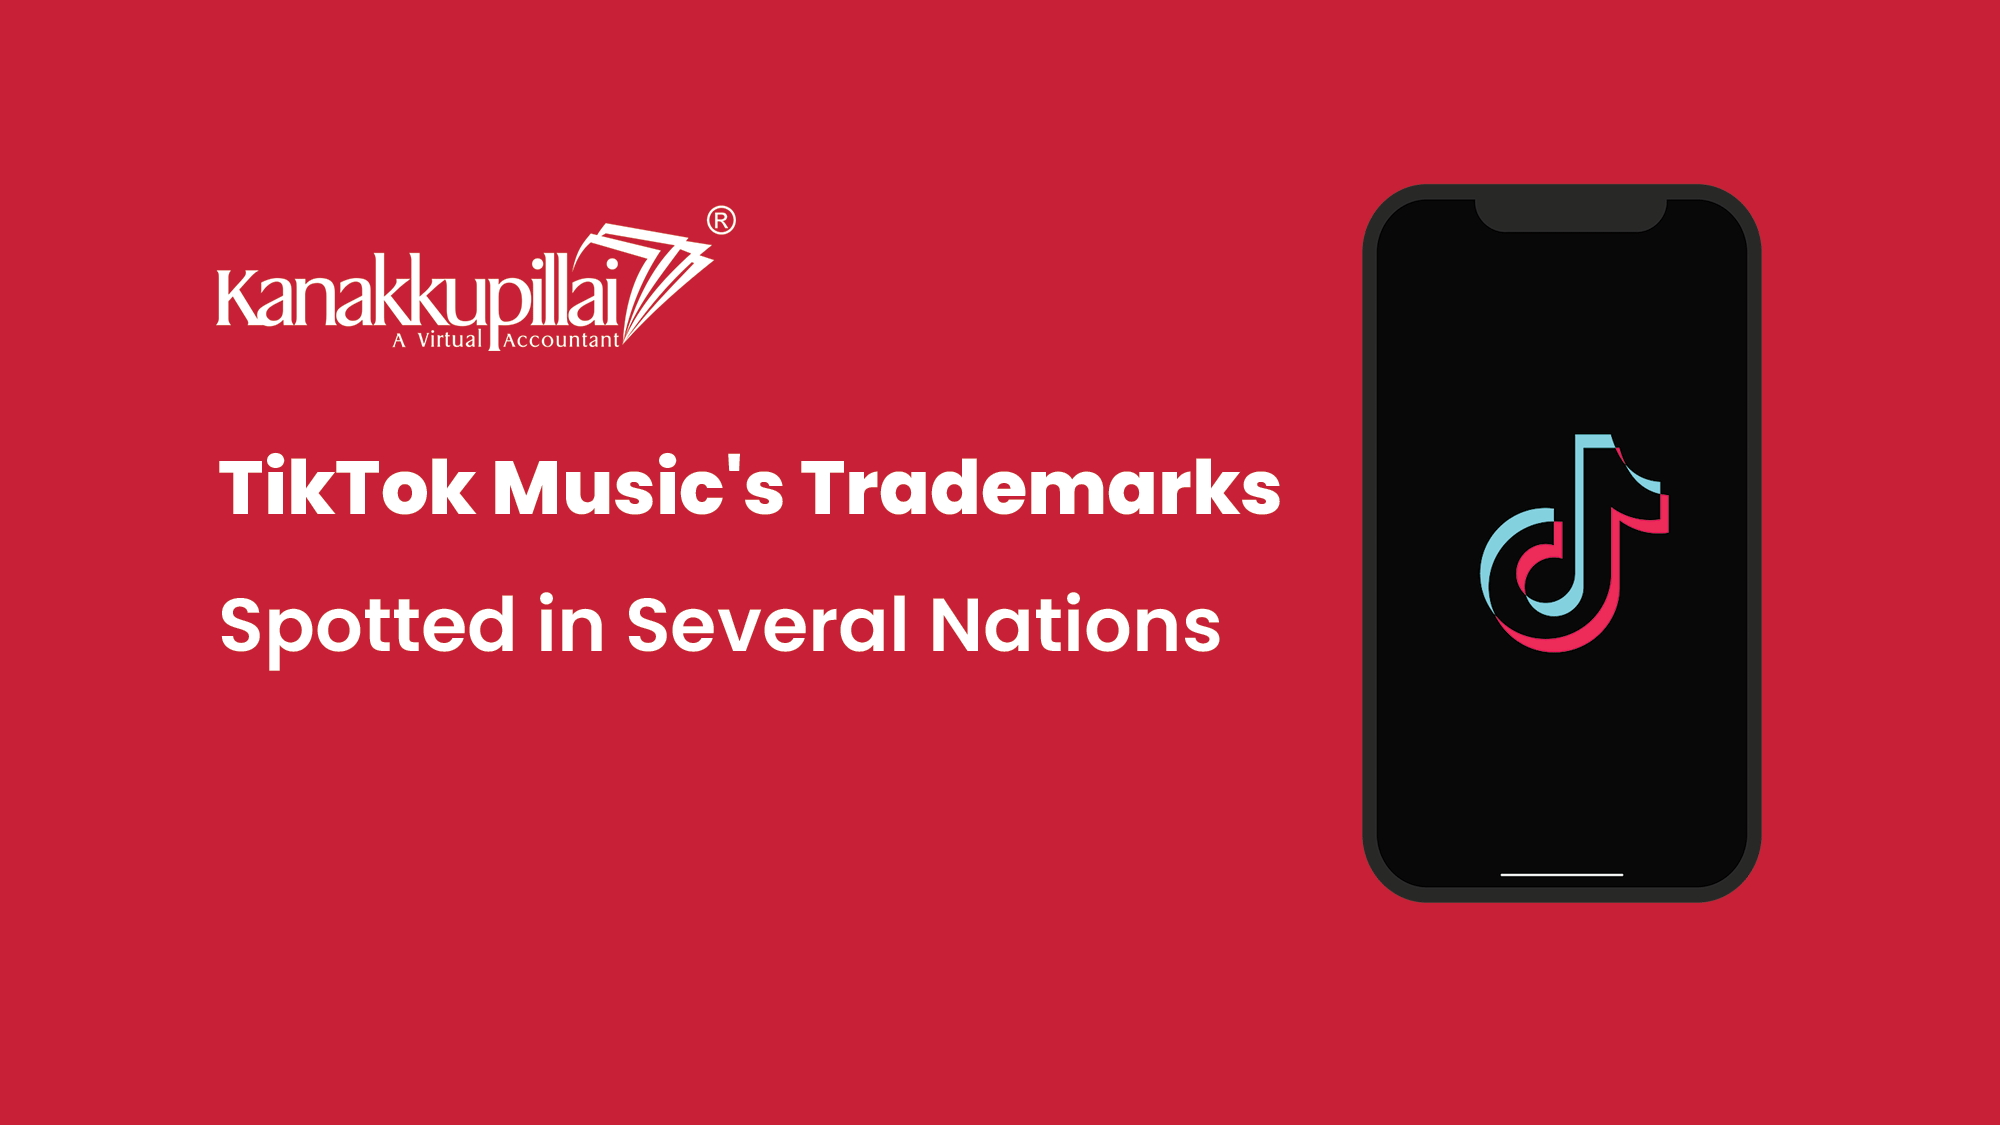 TikTok Music’s Trademarks were Found in Several Nations